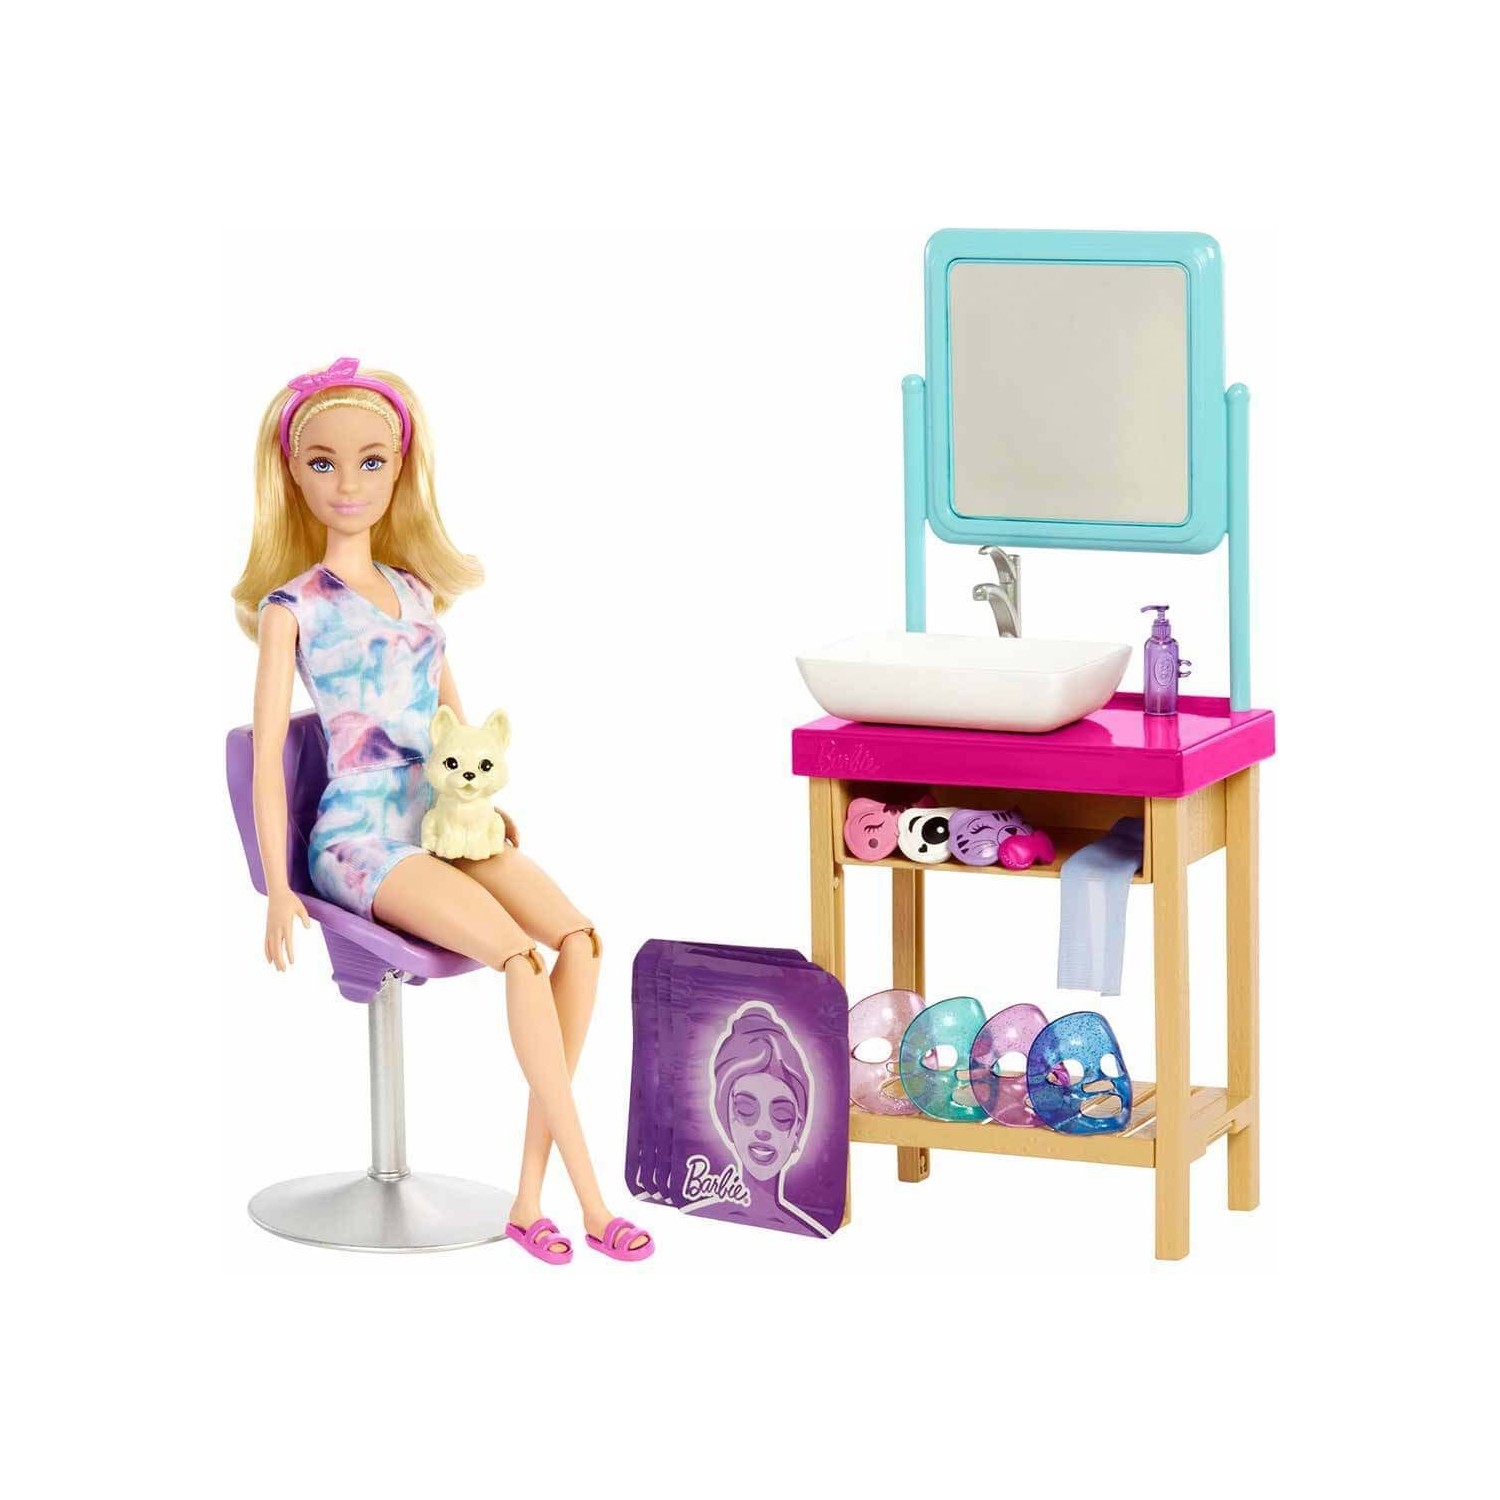 Игровой набор Barbie Sparkle Spa Day HCM82 игровой набор barbie home accessory packs grg56